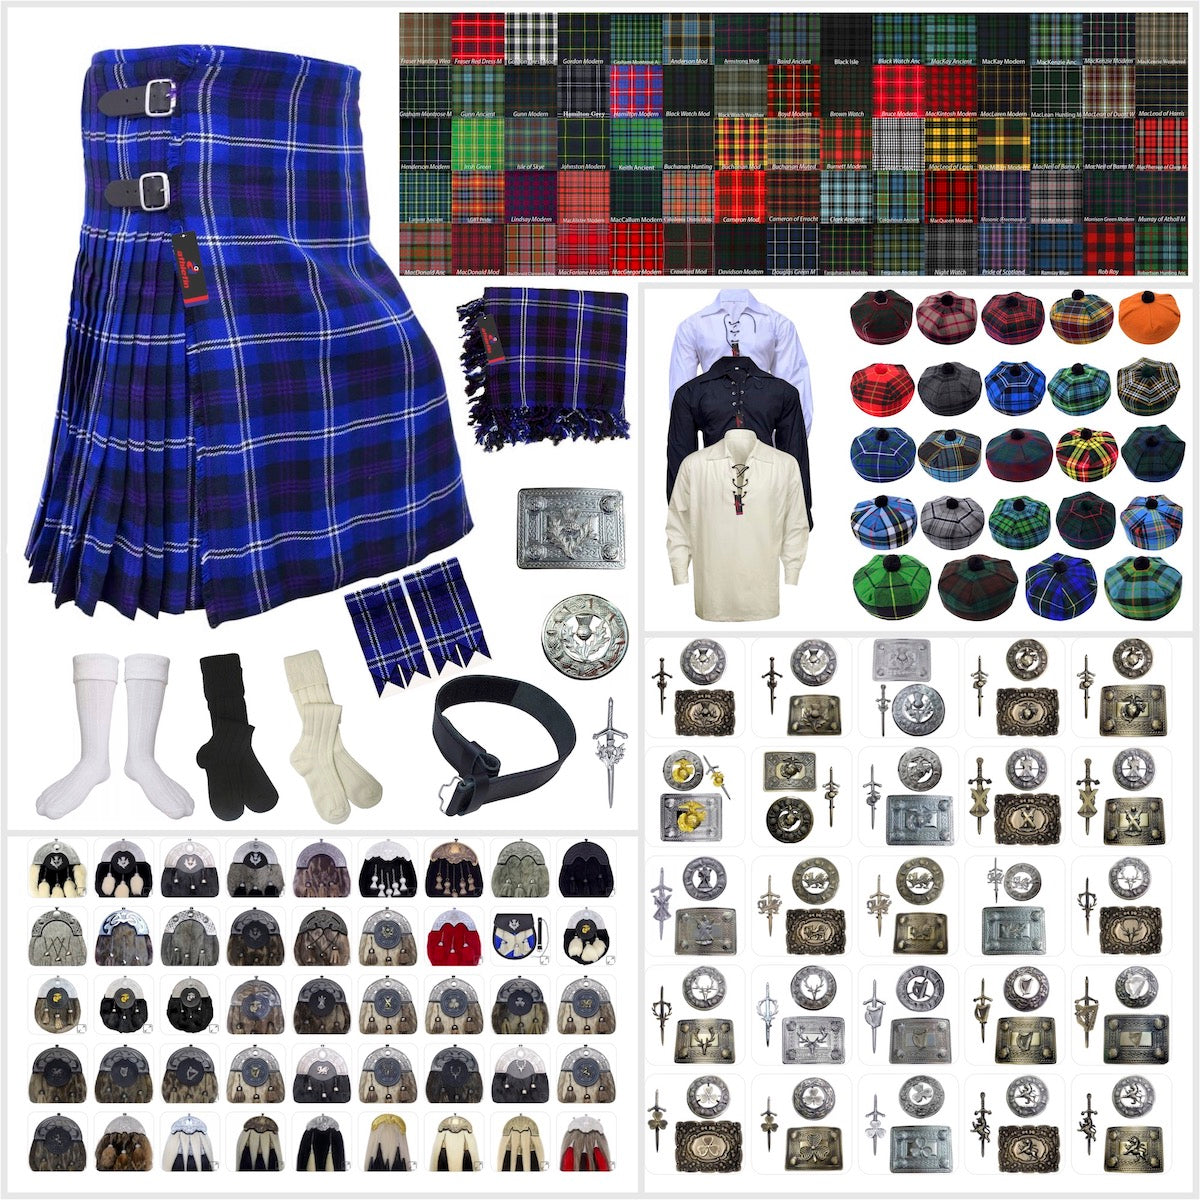 heritage of scotland tartan kilt outfit